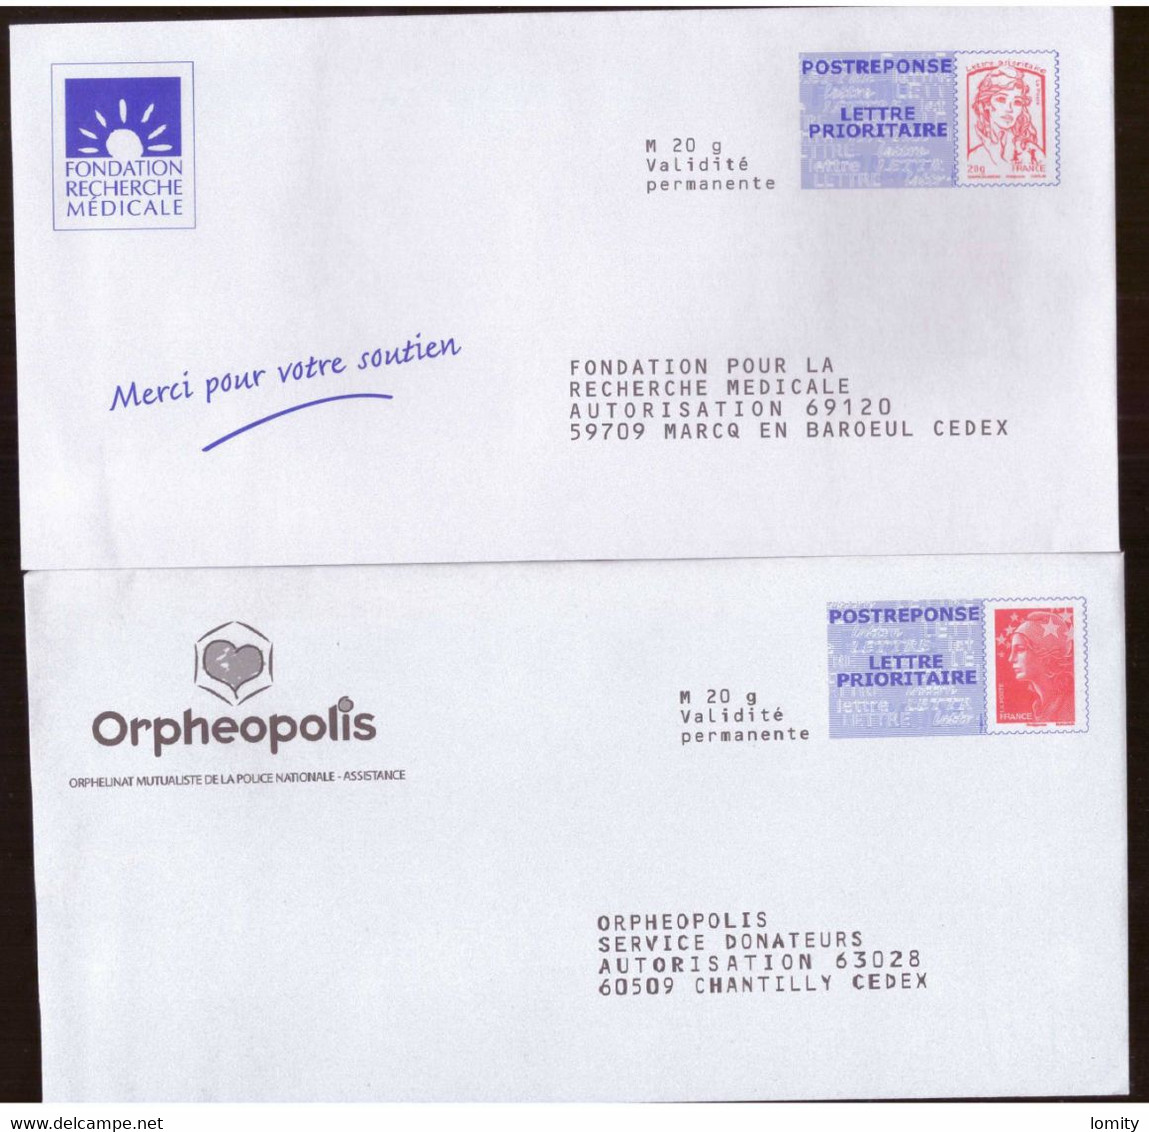 Lot 14 Enveloppes Enveloppe Neuve Pap Pret A Poster Reponse Postreponse Marianne Ciappa Kawena Beaujard Lamouche - Lots Et Collections : Entiers Et PAP